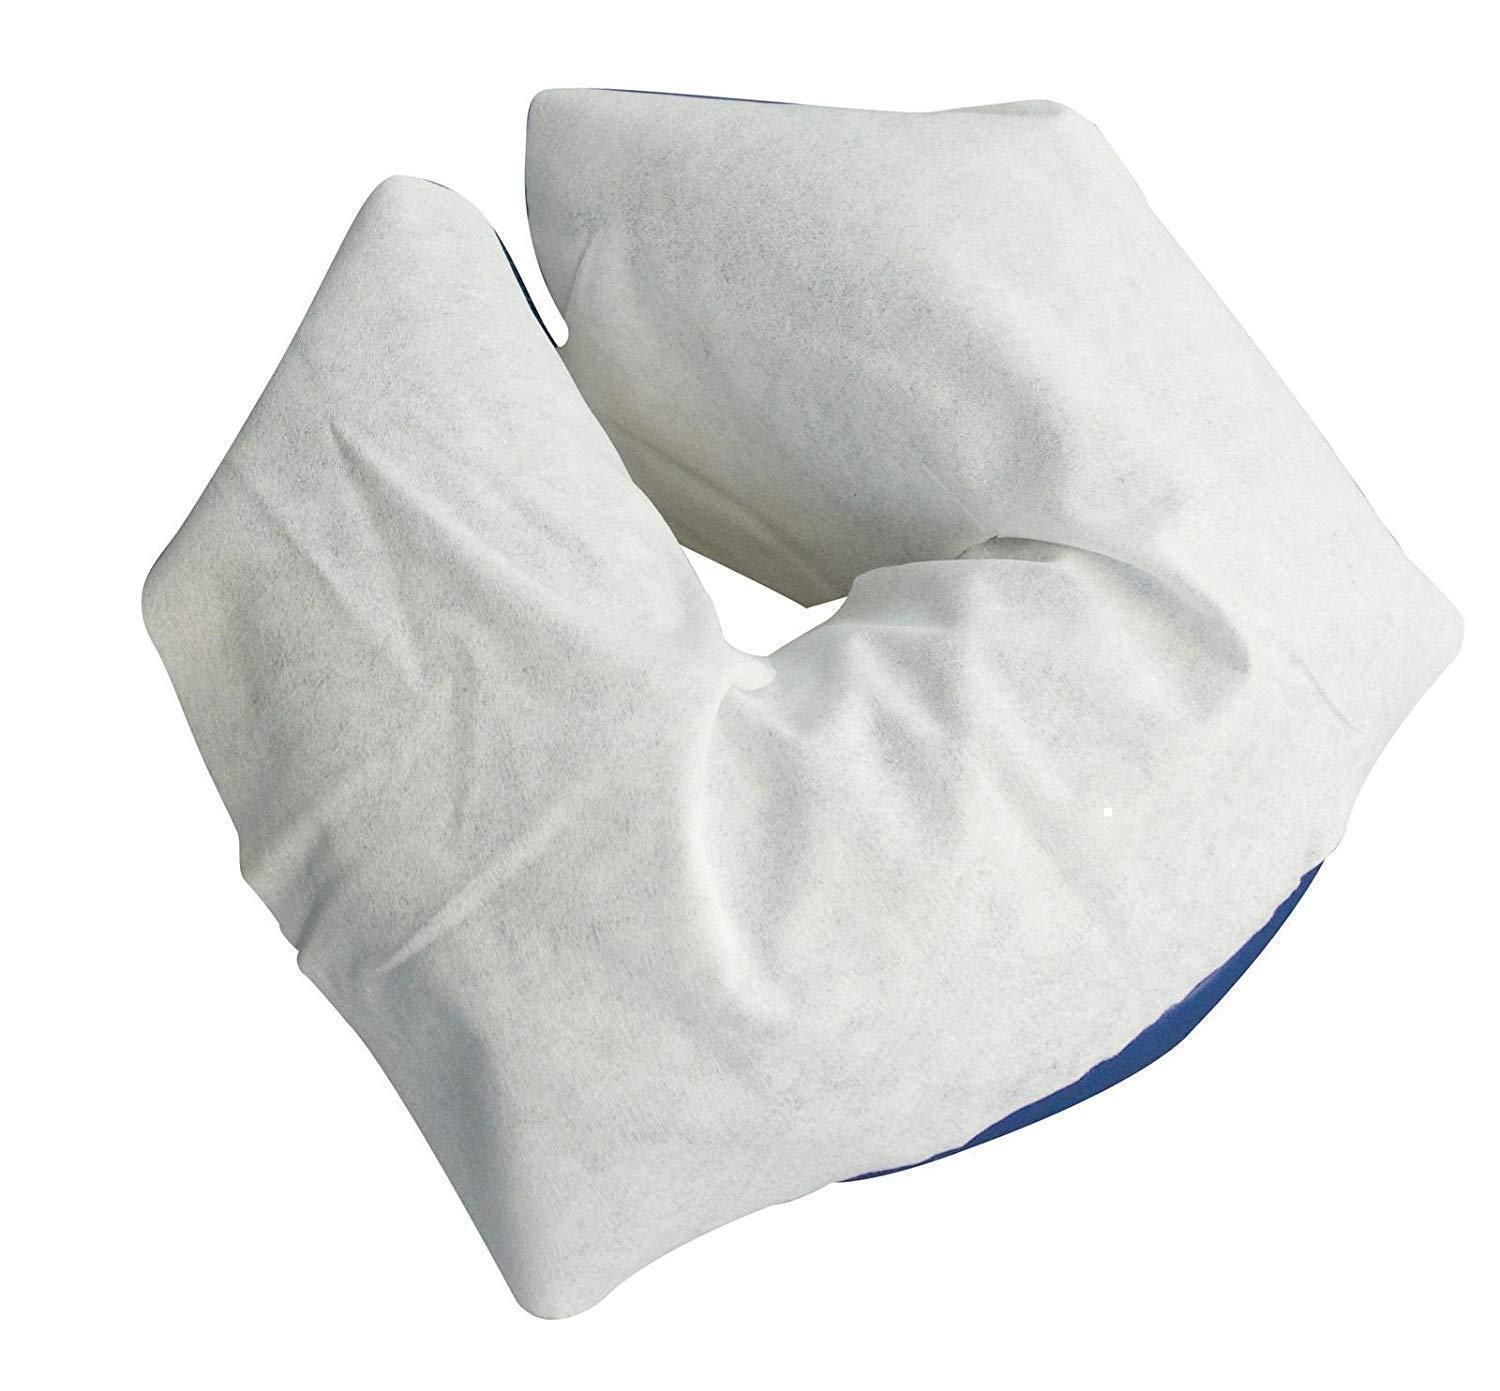 BodyMed Premium Headrest Paper Roll, Smooth White, 12 x 225', (12